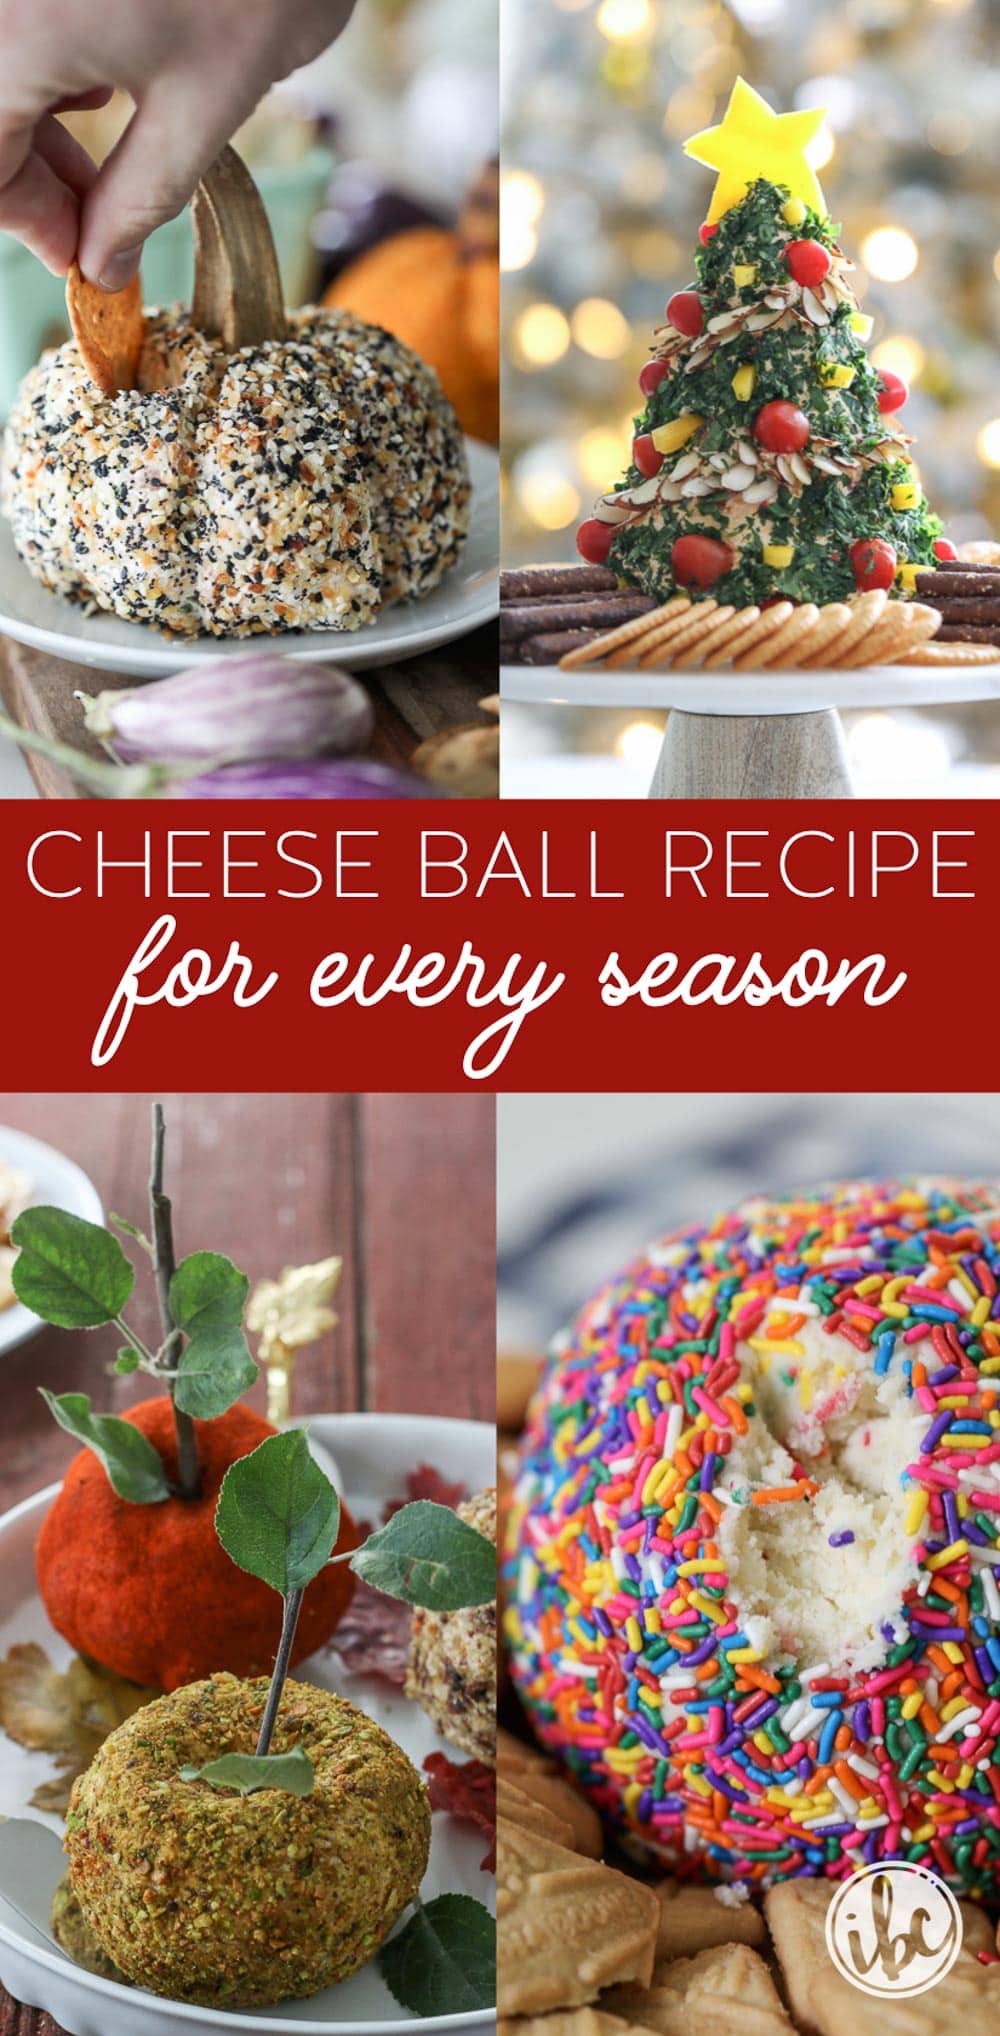 A Cheese Ball Recipe for Every Season #appetizer #recipe #cheeseball #cheese #snack #entertaining #easy